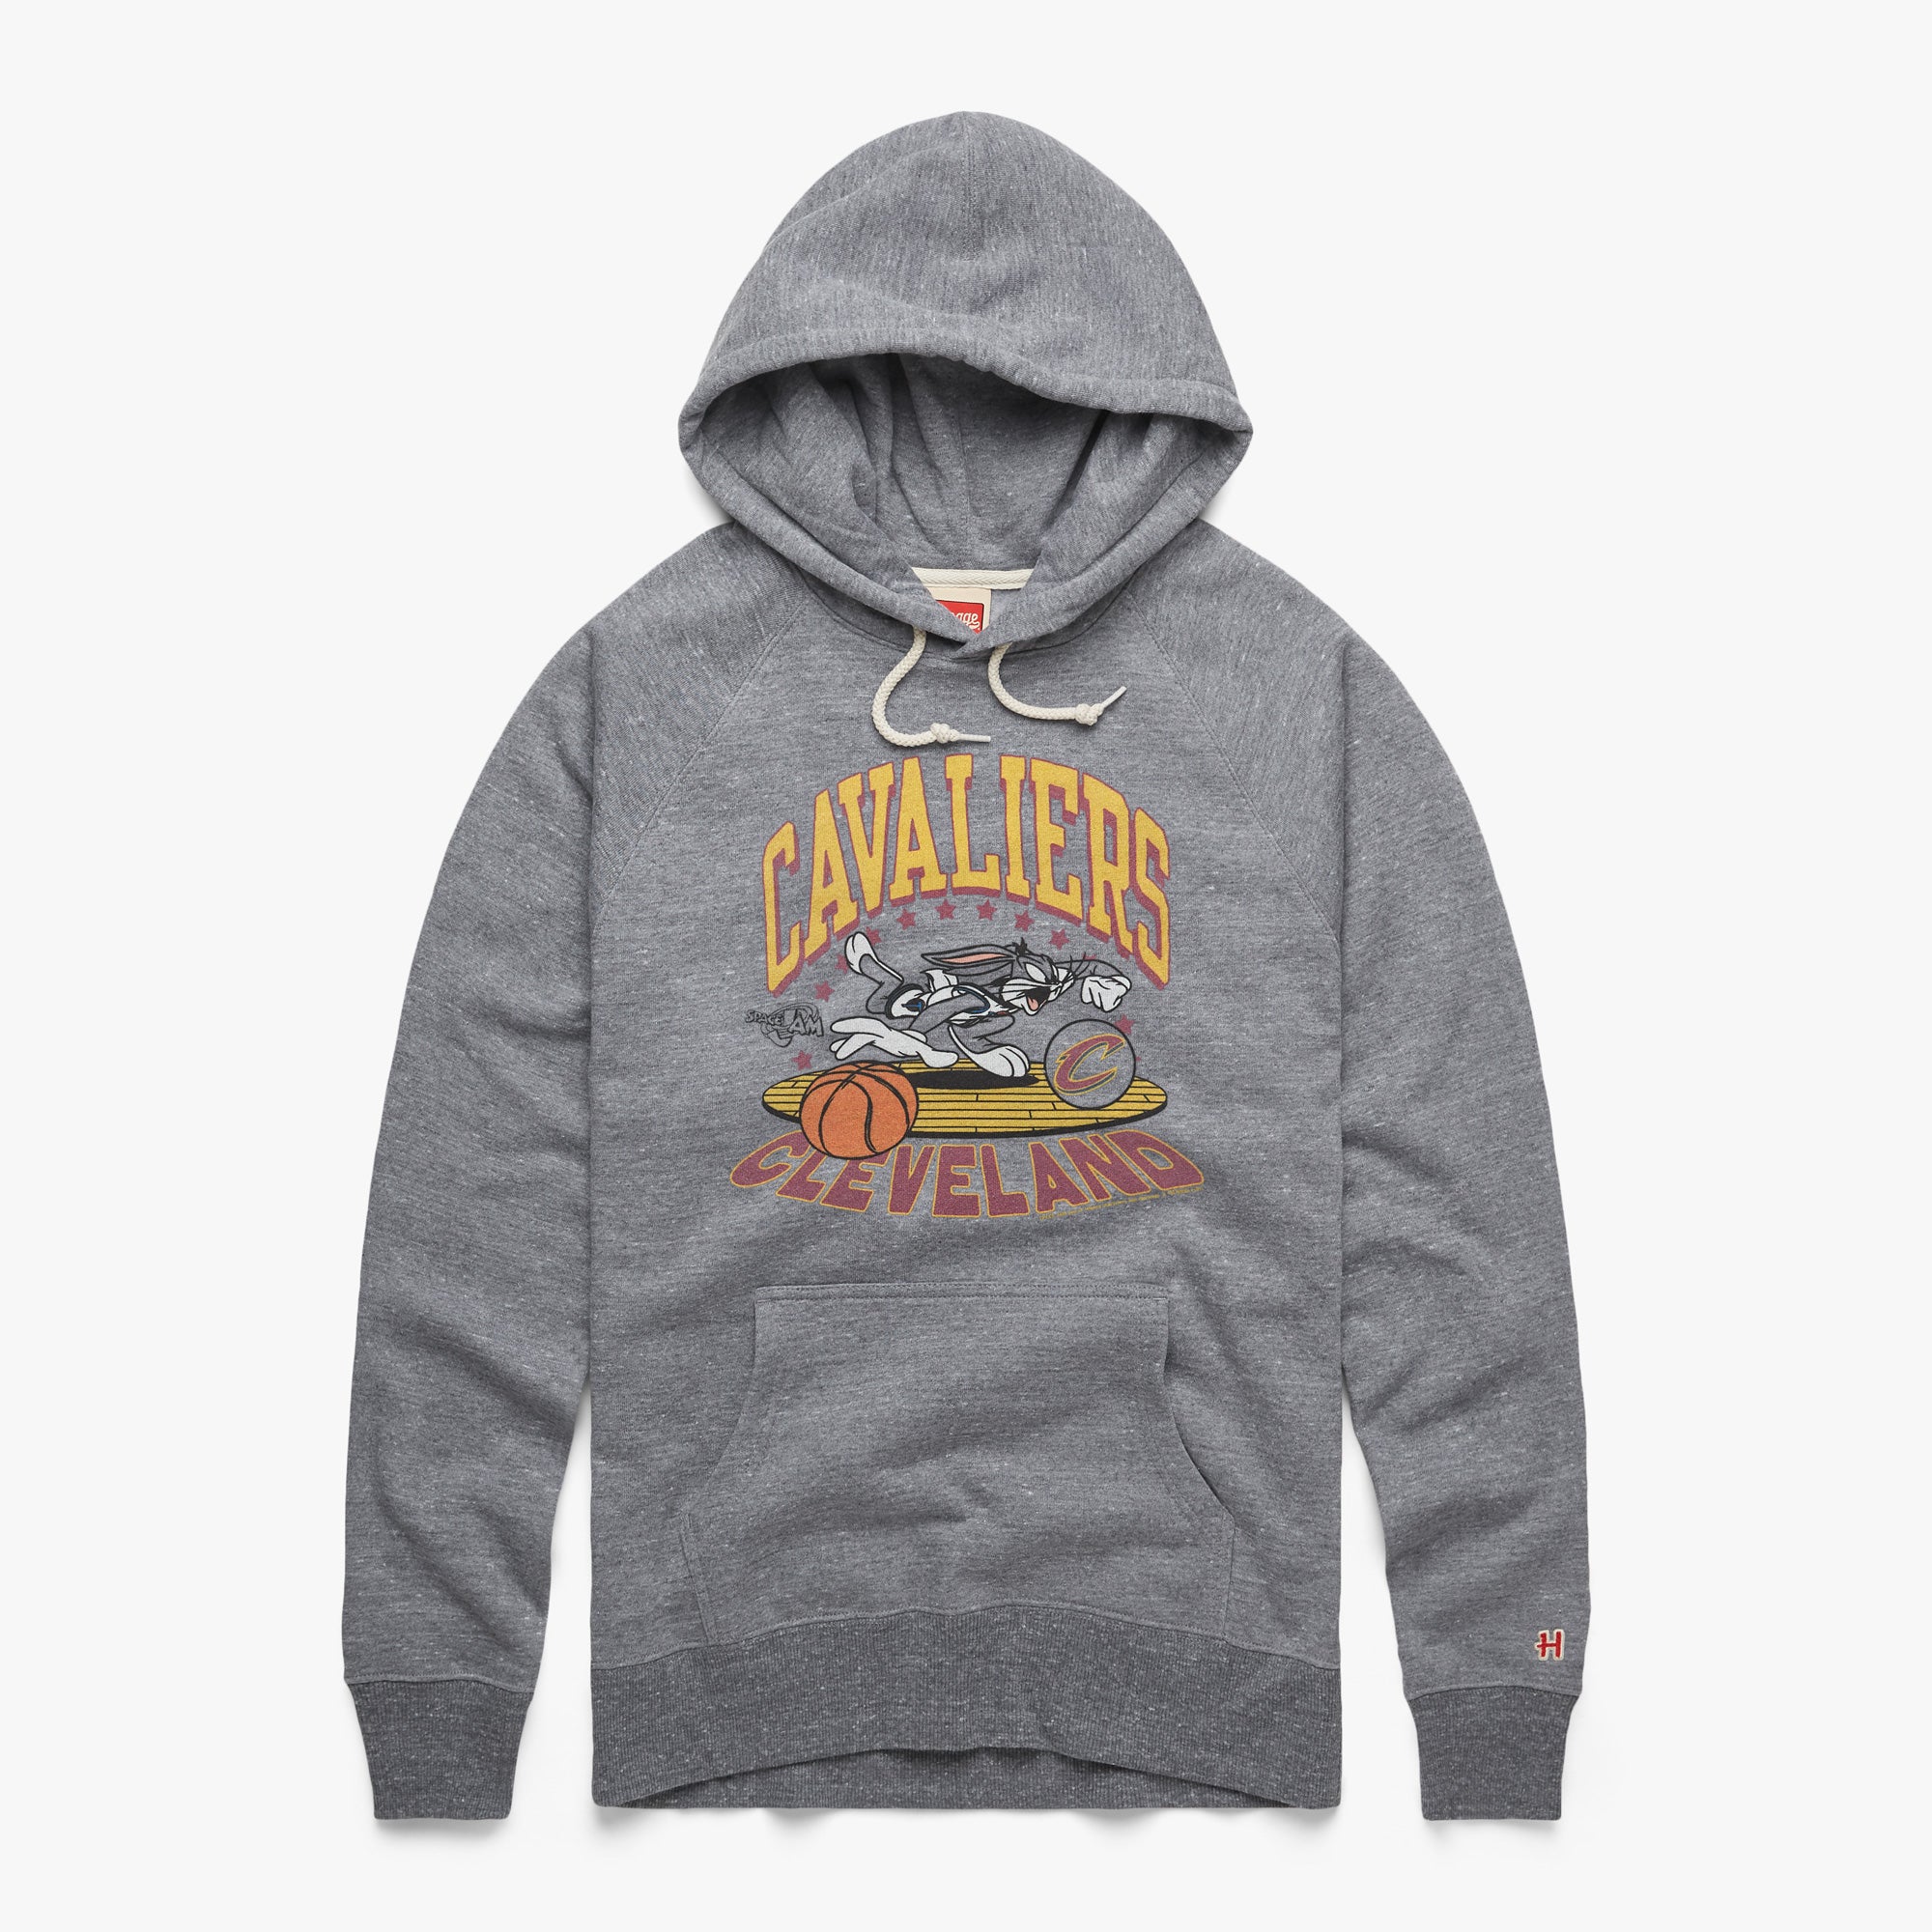 Cleveland Cavaliers Hoodies, Cavaliers Sweatshirts